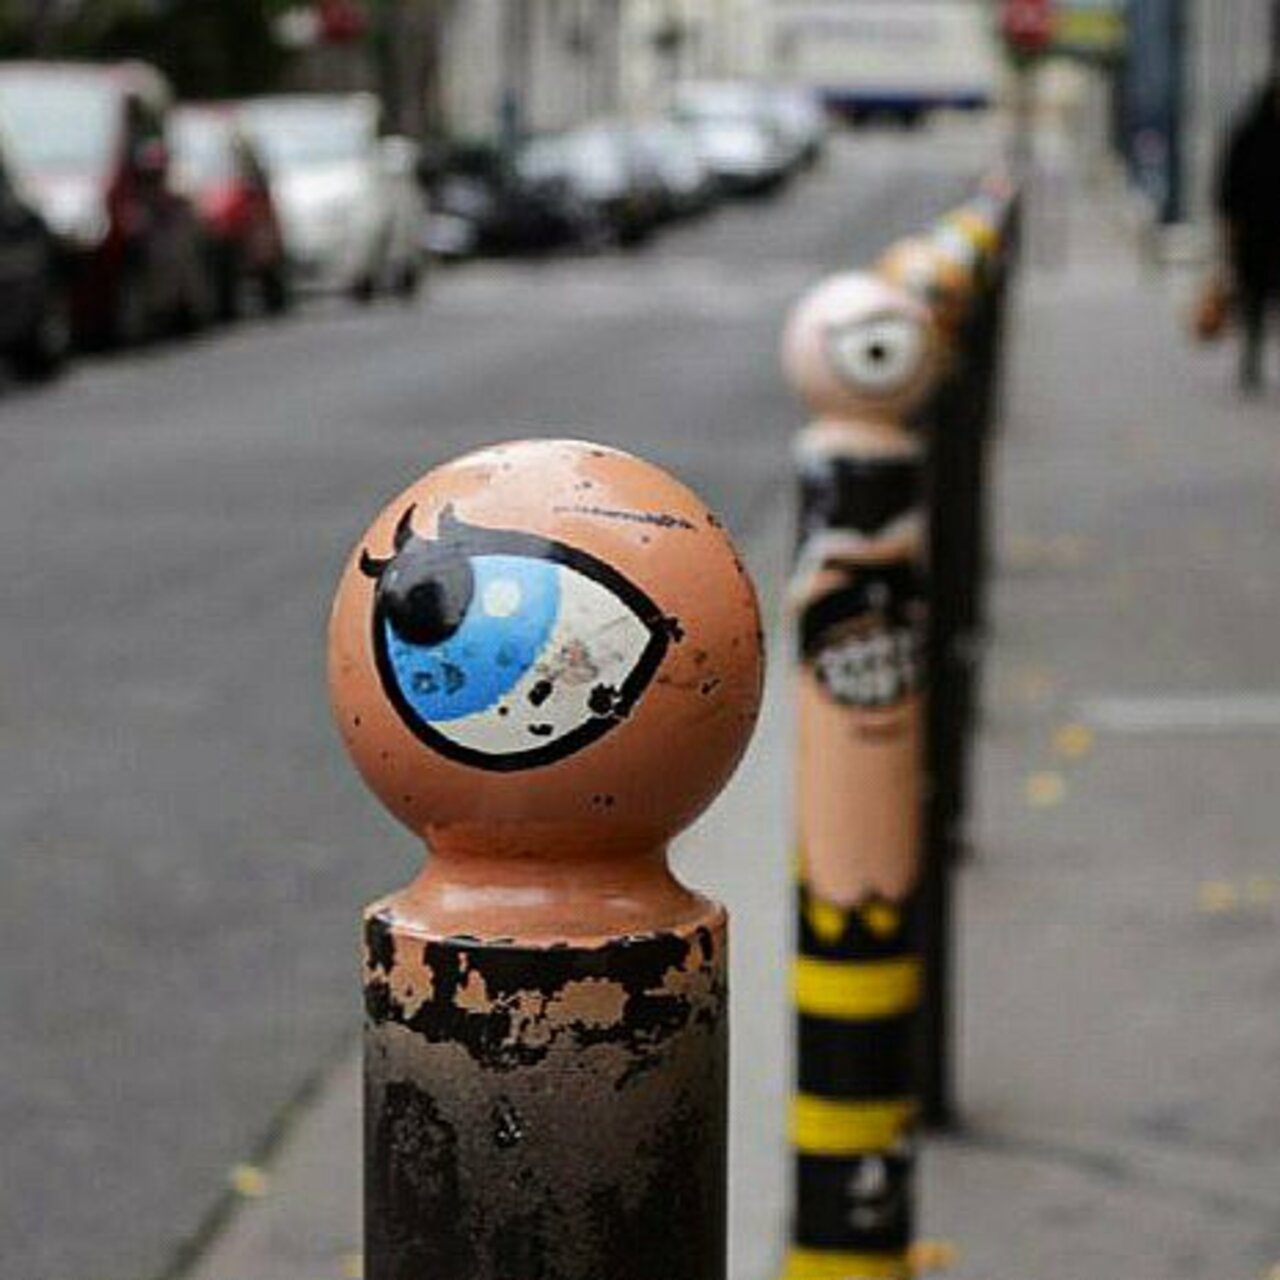 #Paris #graffiti photo by @jpoesse http://ift.tt/1LxZMHQ #StreetArt https://t.co/kJnlyXeQHX